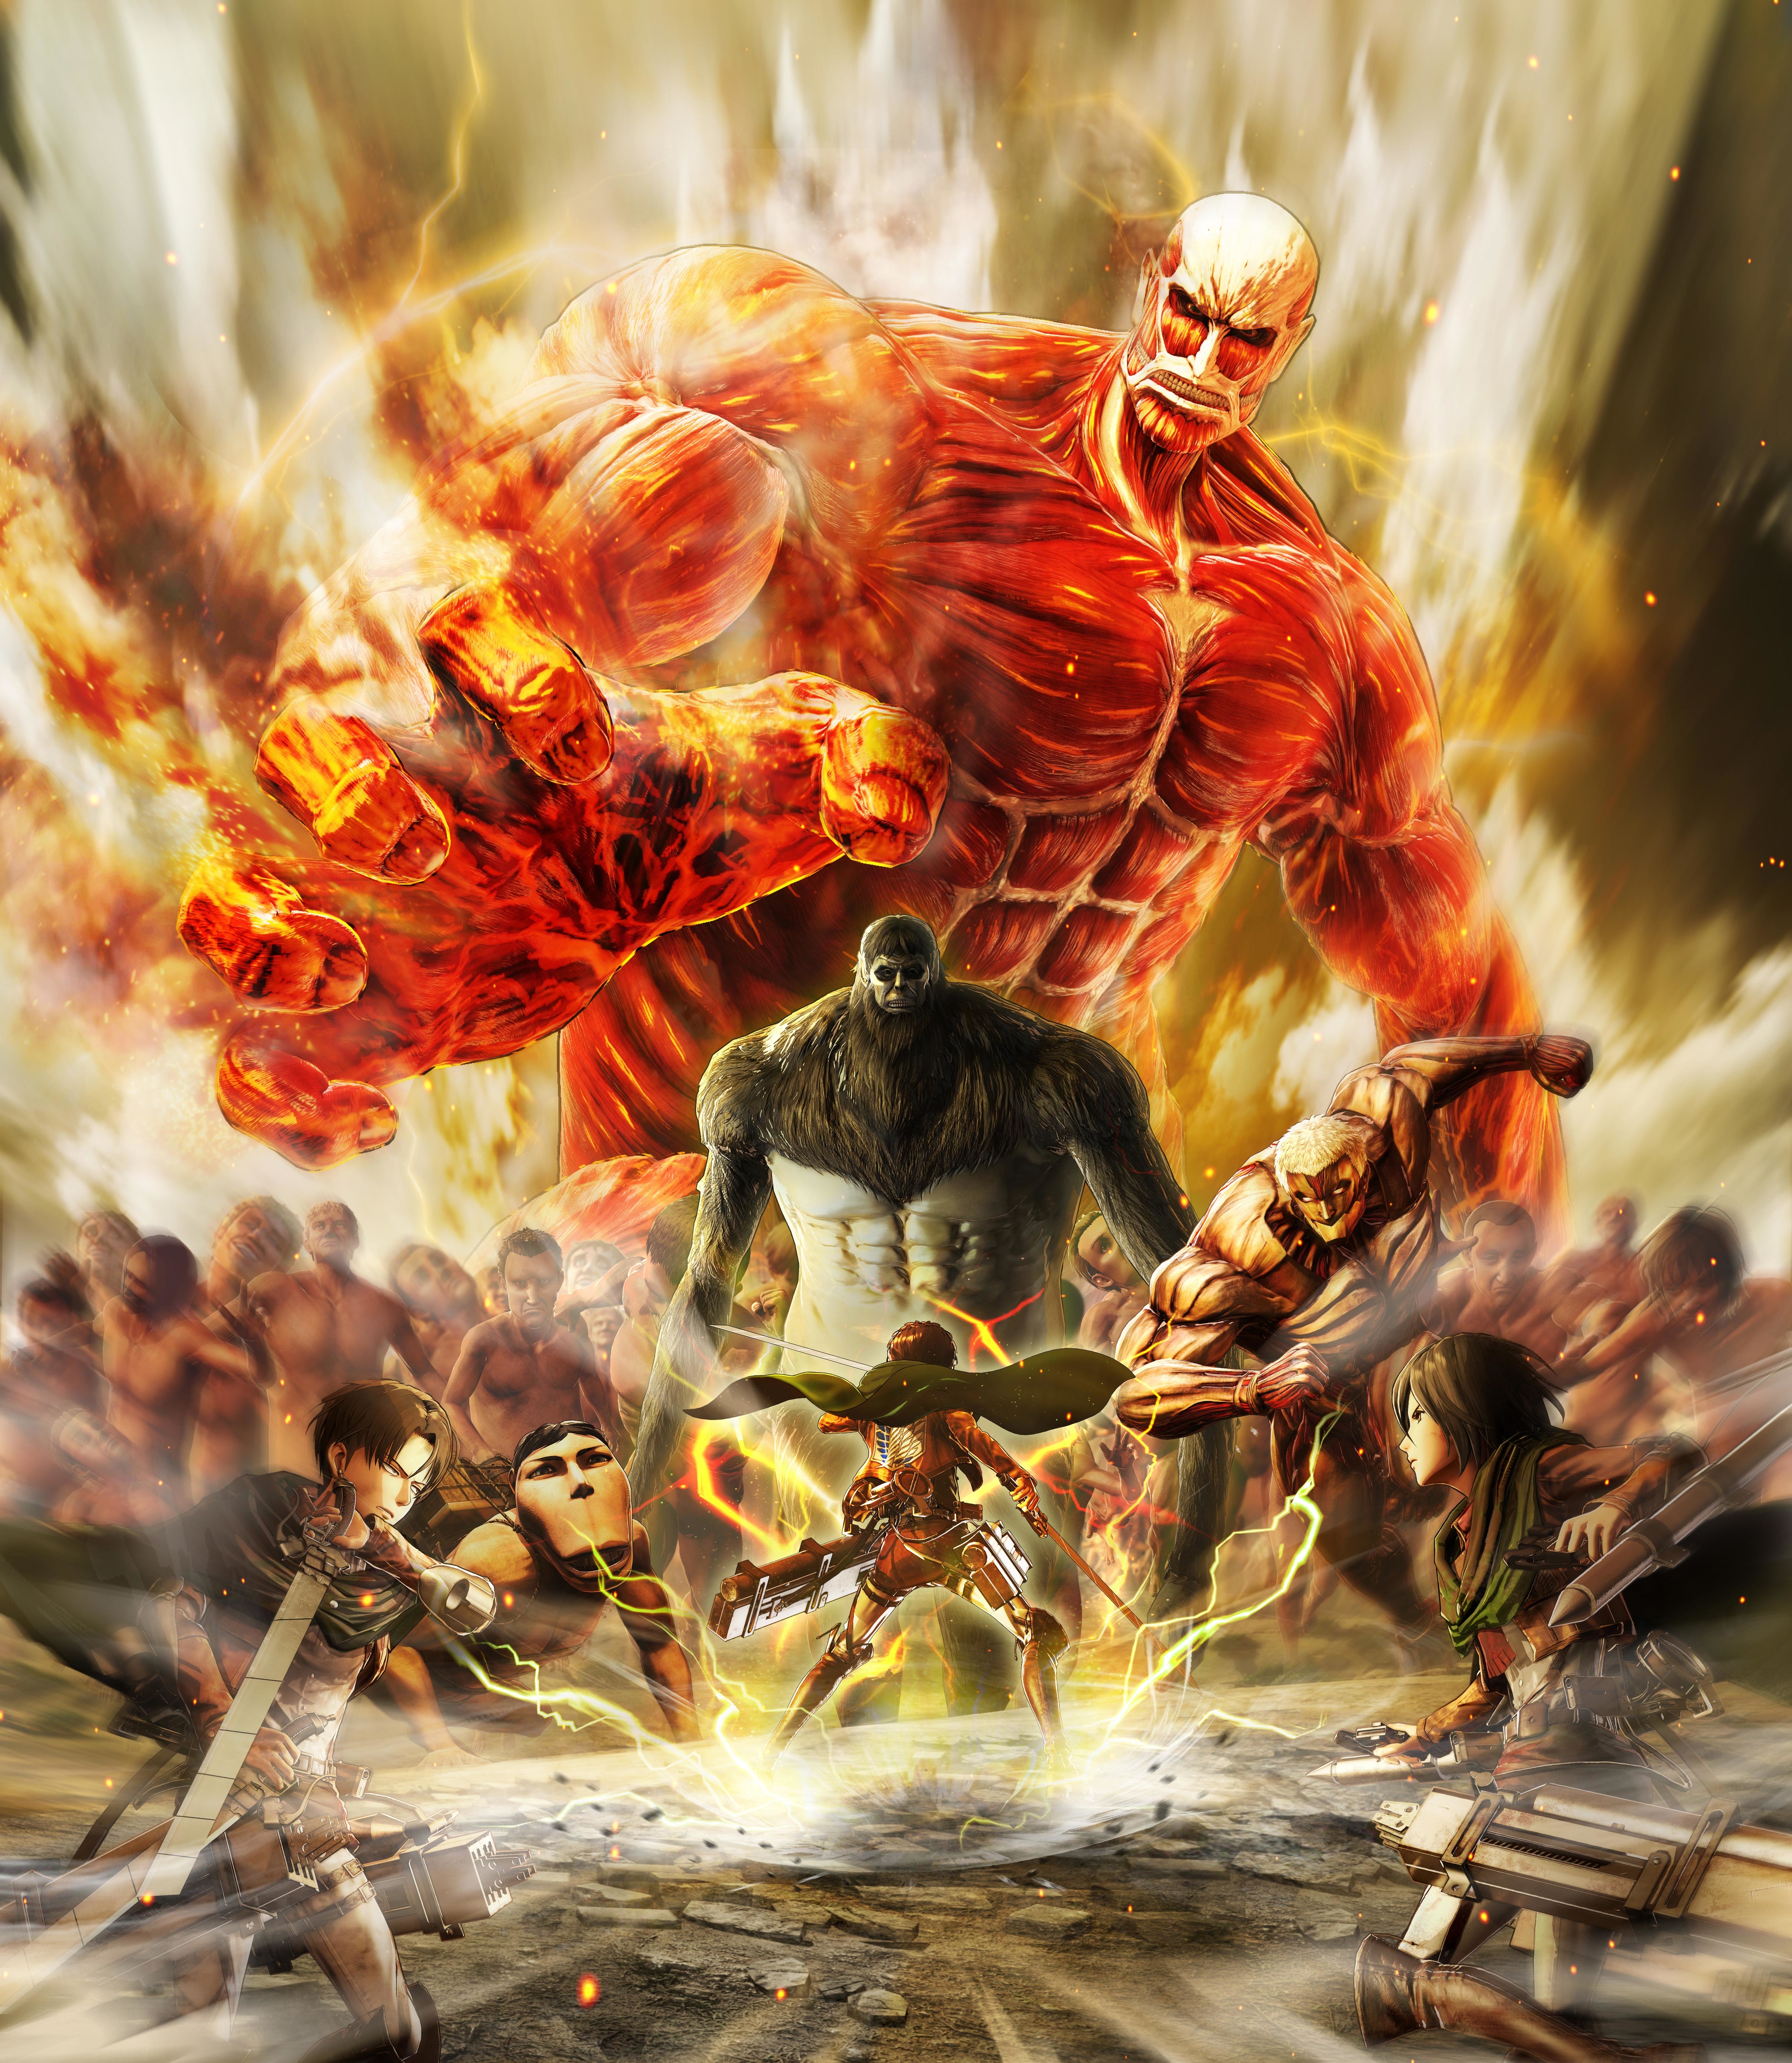 Attack on Titan Final Battle Wallpaper, HD Games 4K